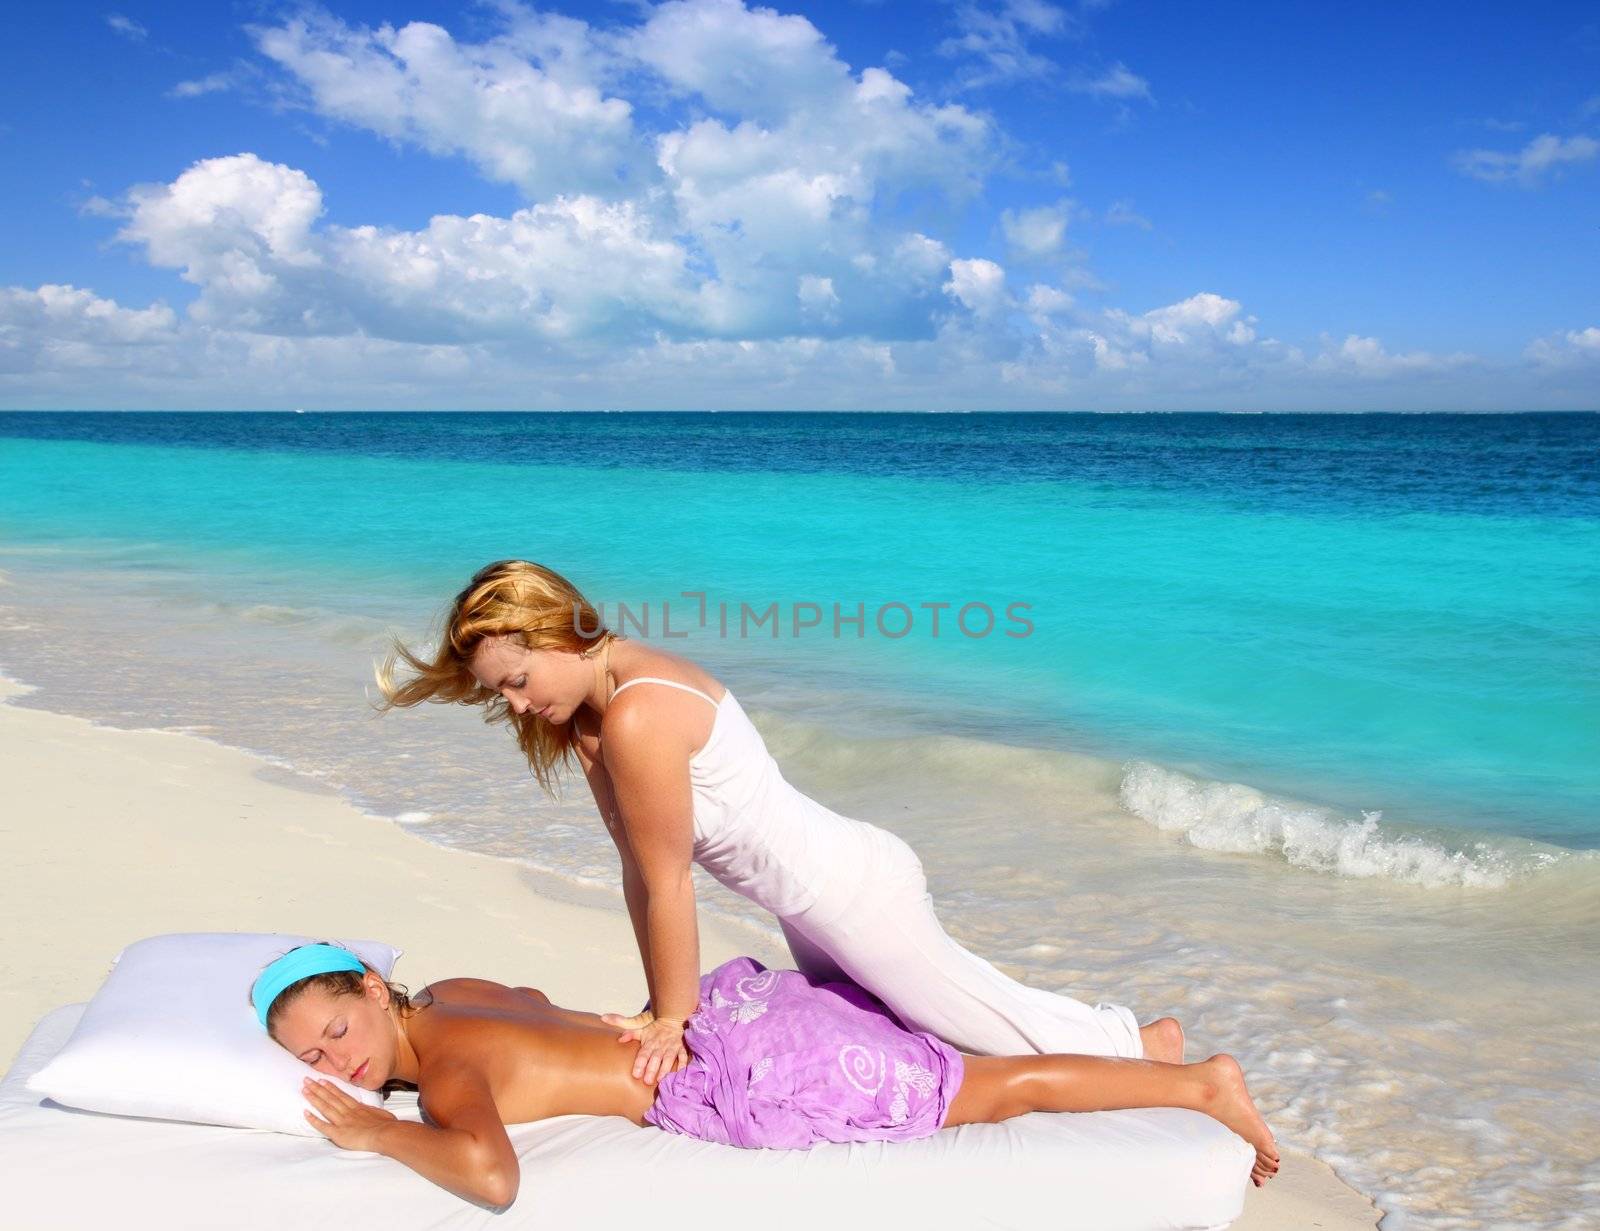 Caribbean beach massage shiatsu waist pressure woman outdoor paradise